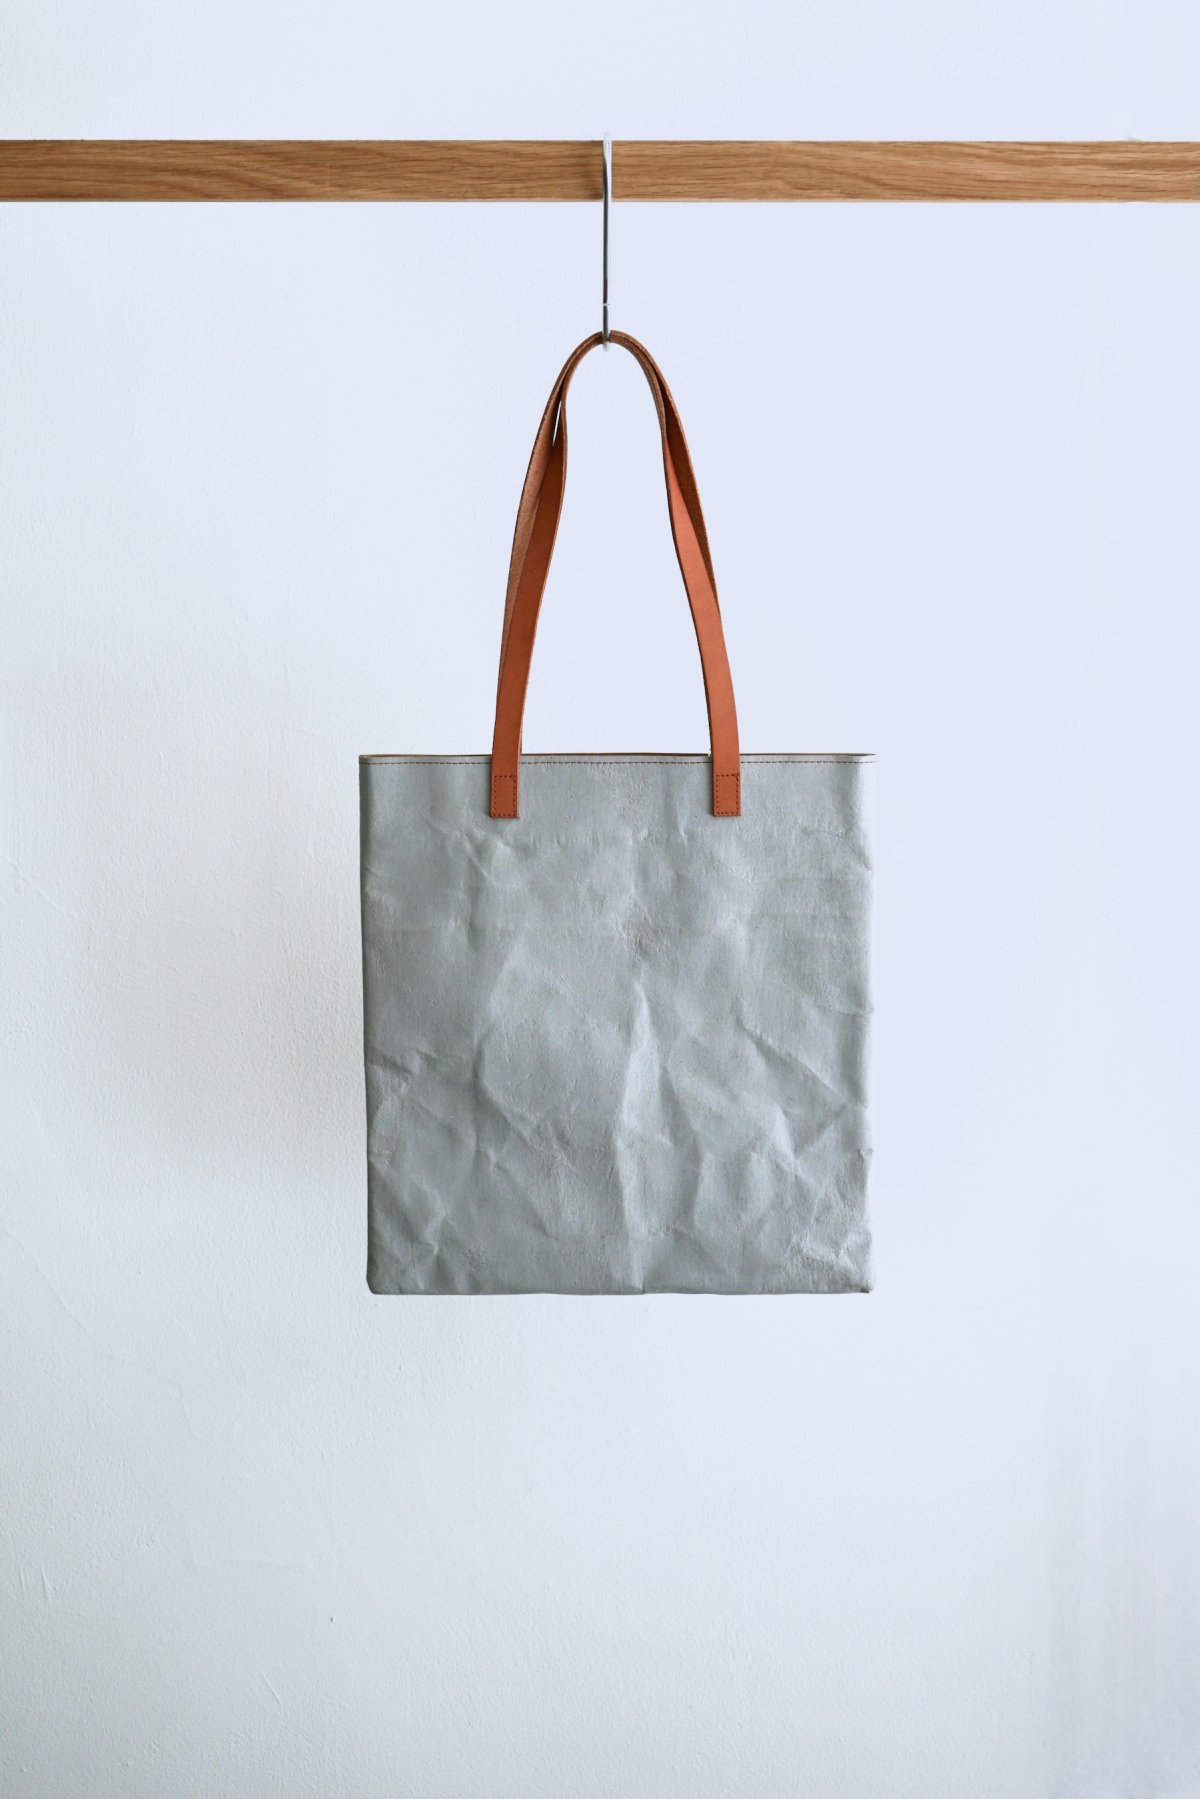 papier langackerhäusl / Sleeve Tote Bag / Concrete coated